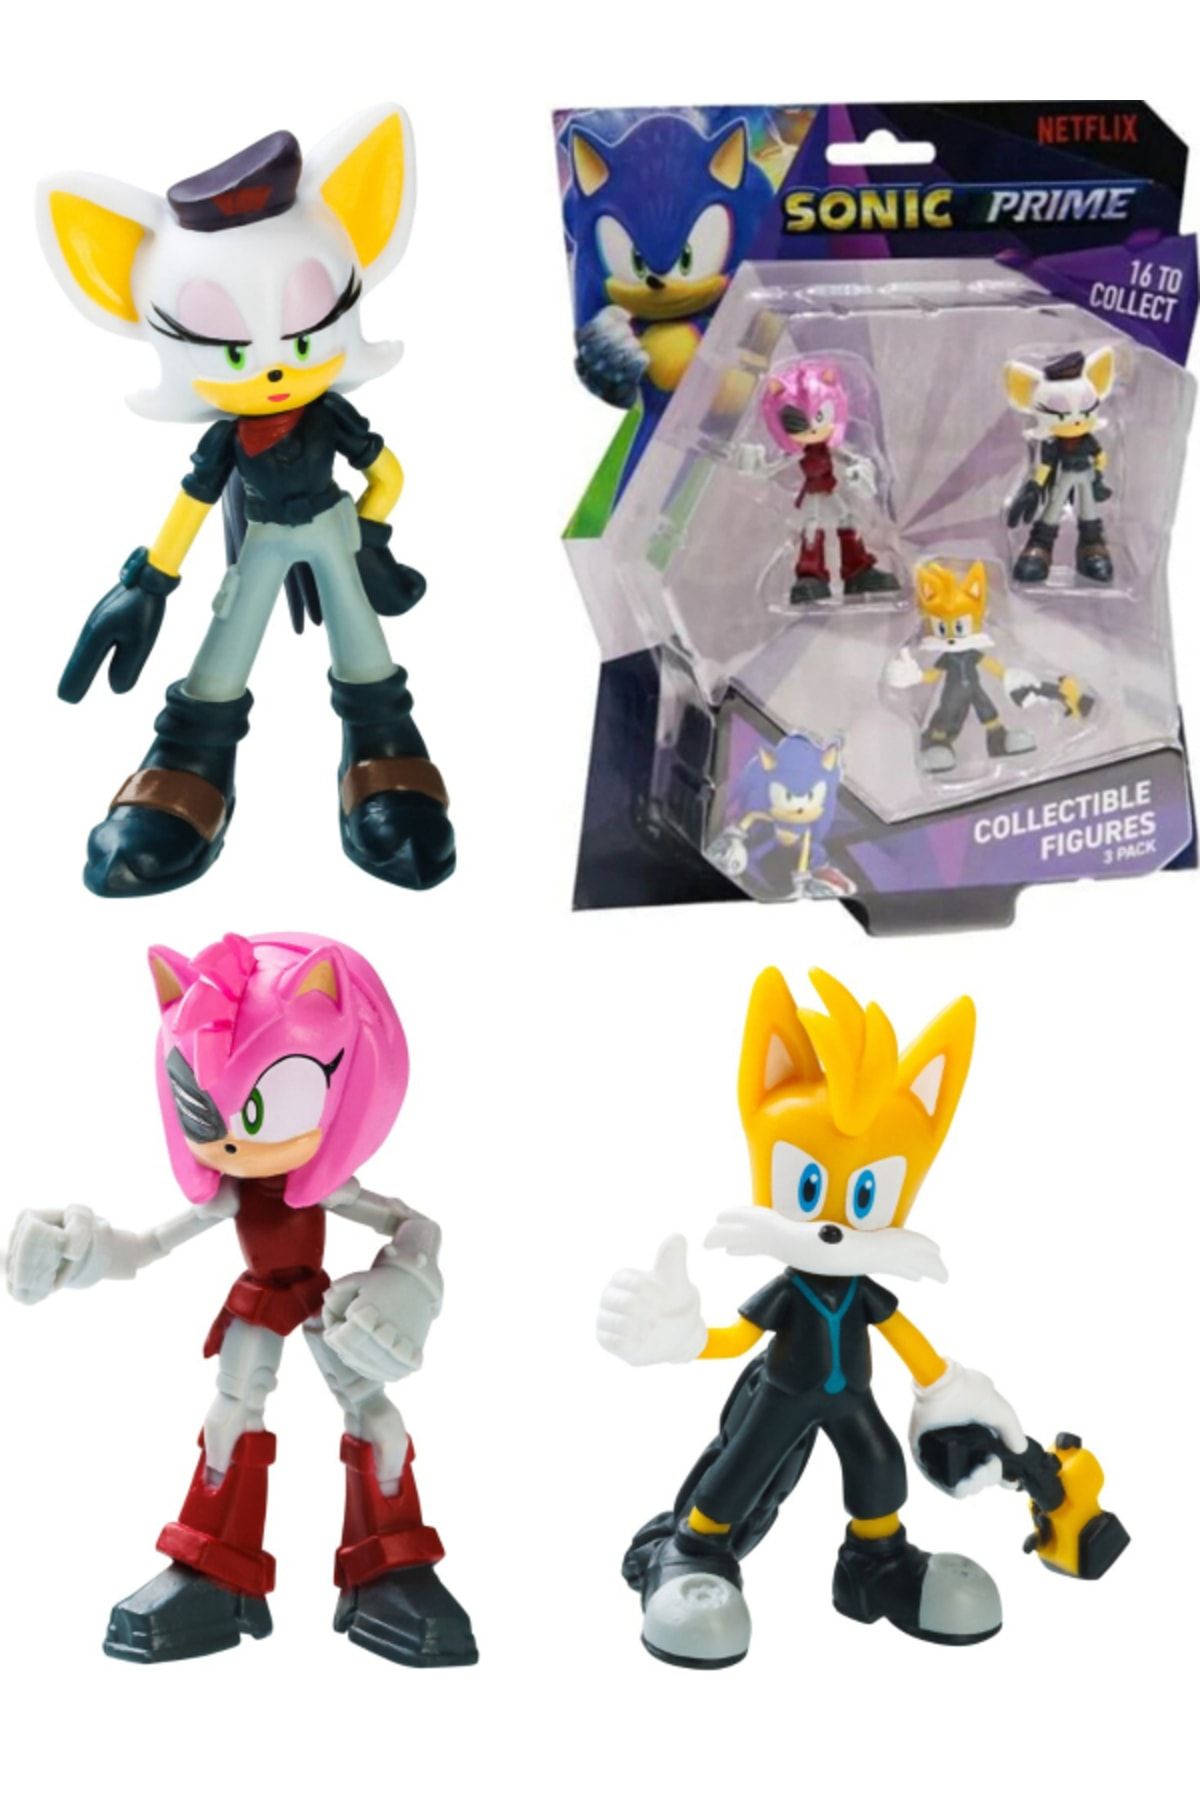 Sonic The Hedgehog Sonic Prime Sonic, Sails Tails & Batten Rouge Mini  Figure 3-Pack (No Place)